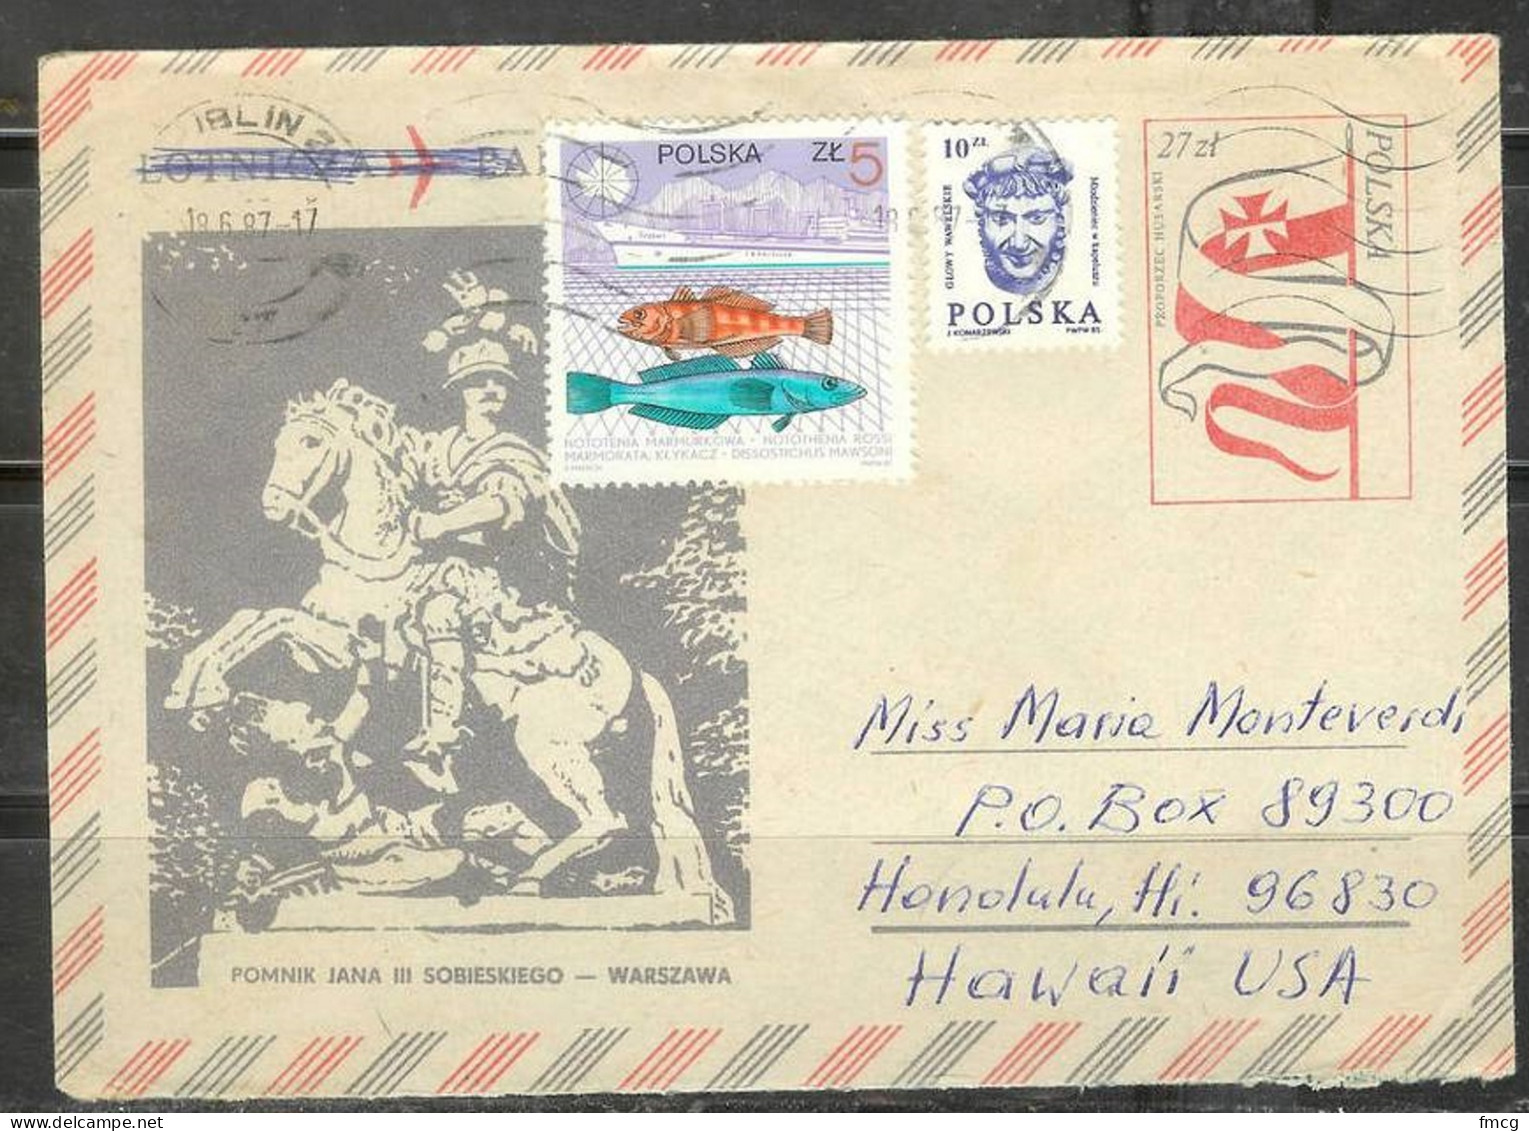 1987 Antarctic Ship & Fish, Postal Envelope To Hawaii - Covers & Documents